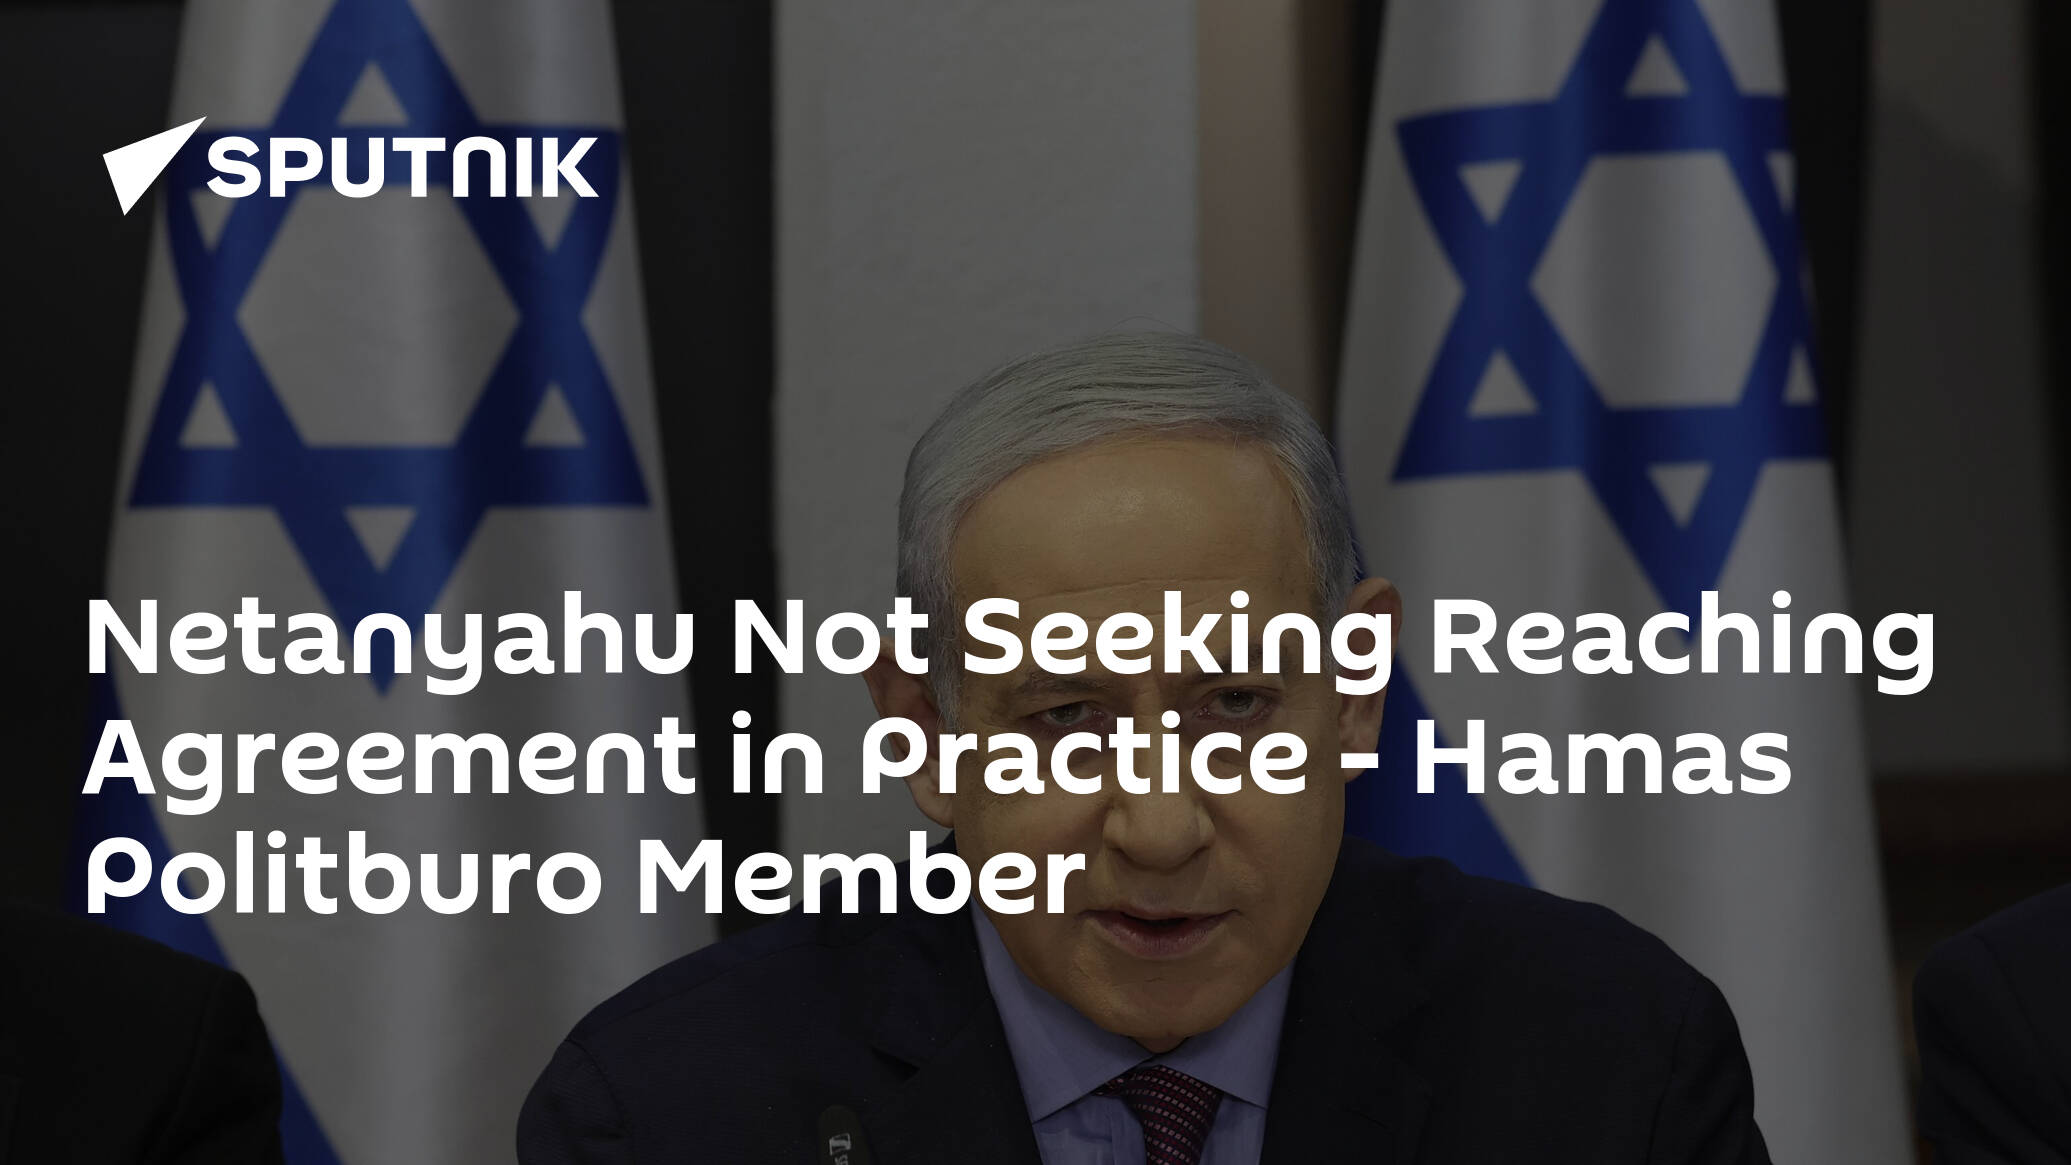 Netanyahu Not Seeking Reaching Agreement in Practice - Hamas Politburo